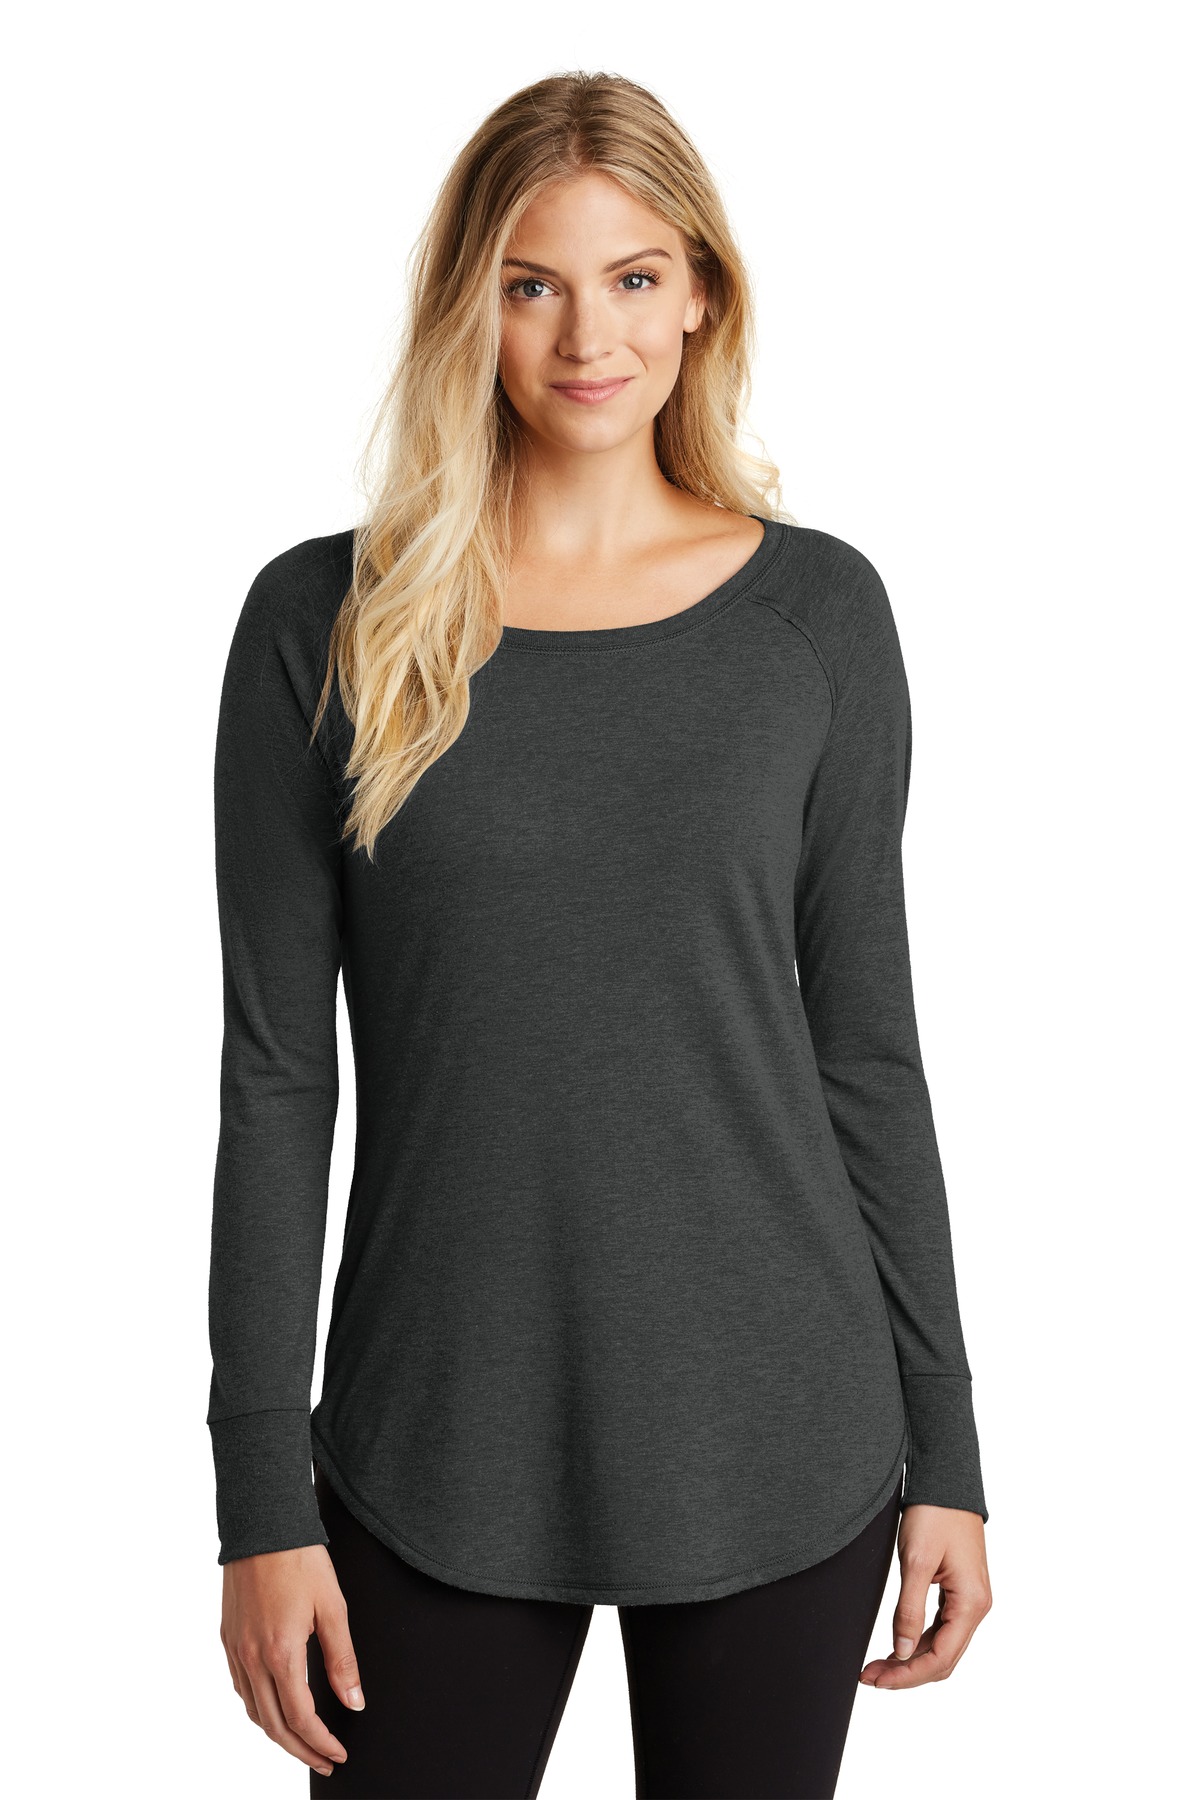 https://images.shirtspace.com/fullsize/bKntotWO3umqHtPx%2BvTSRA%3D%3D/68308/9636-district-dt132l-women-s-perfect-tri-long-sleeve-tunic-tee-front-black-frost.jpg